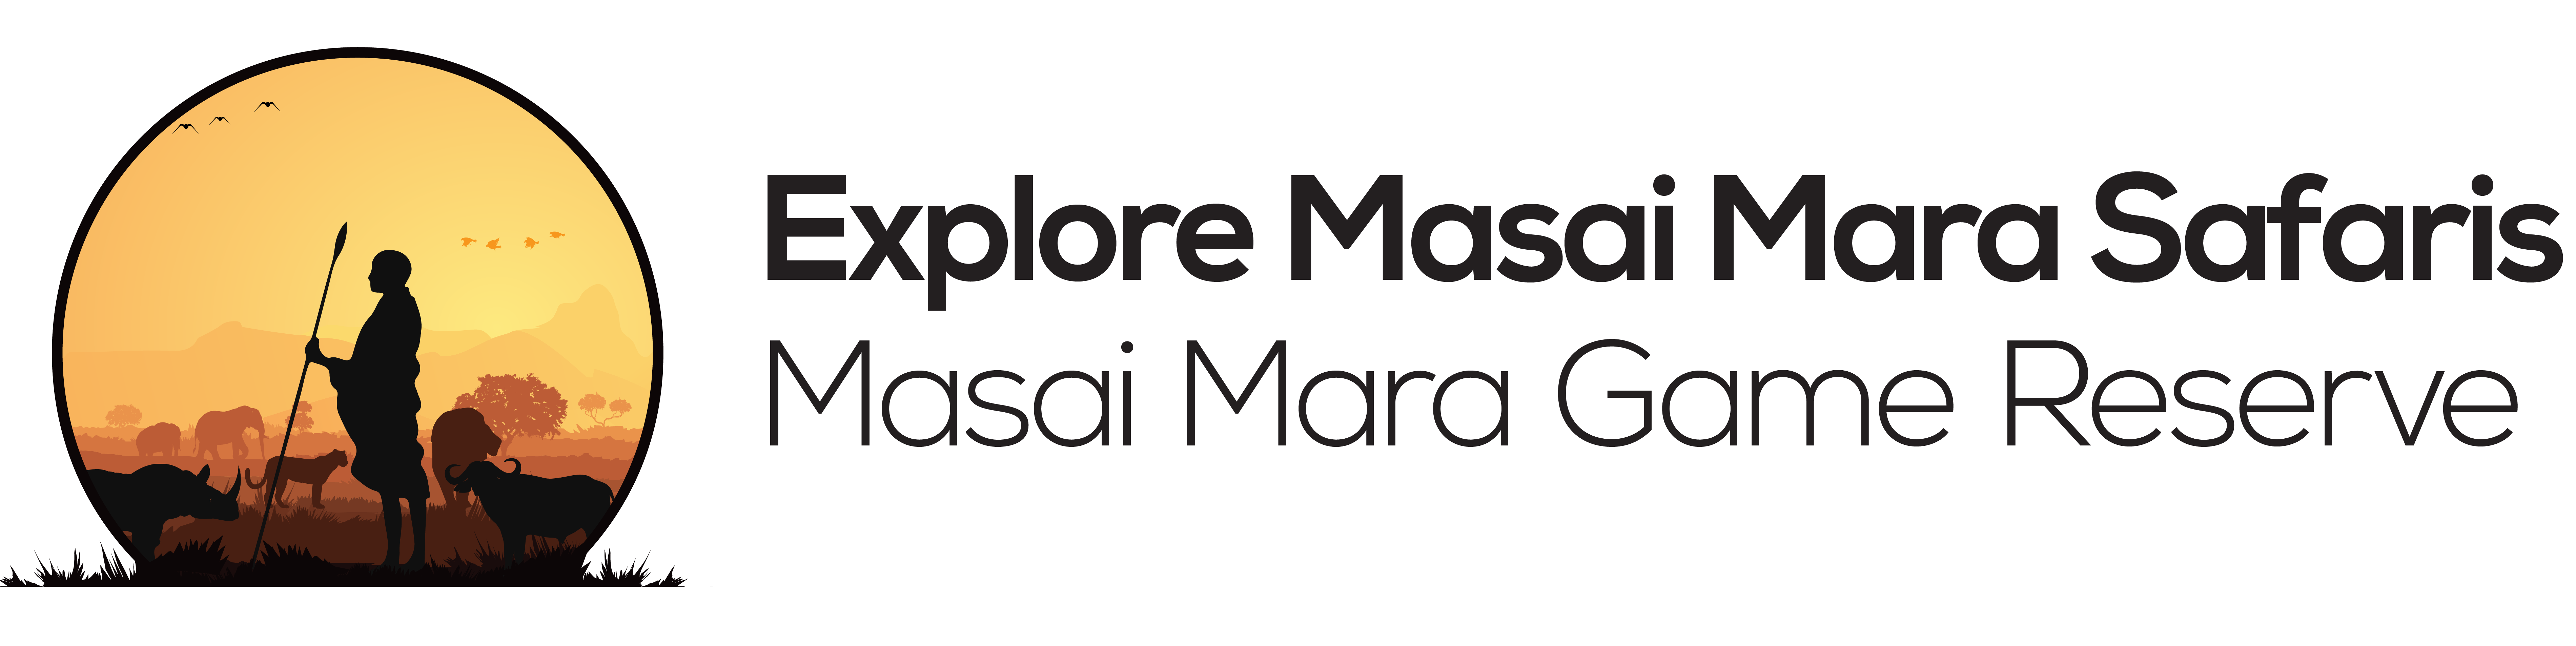 Explore masai mara | The masai people and their culture - masai culture and the people